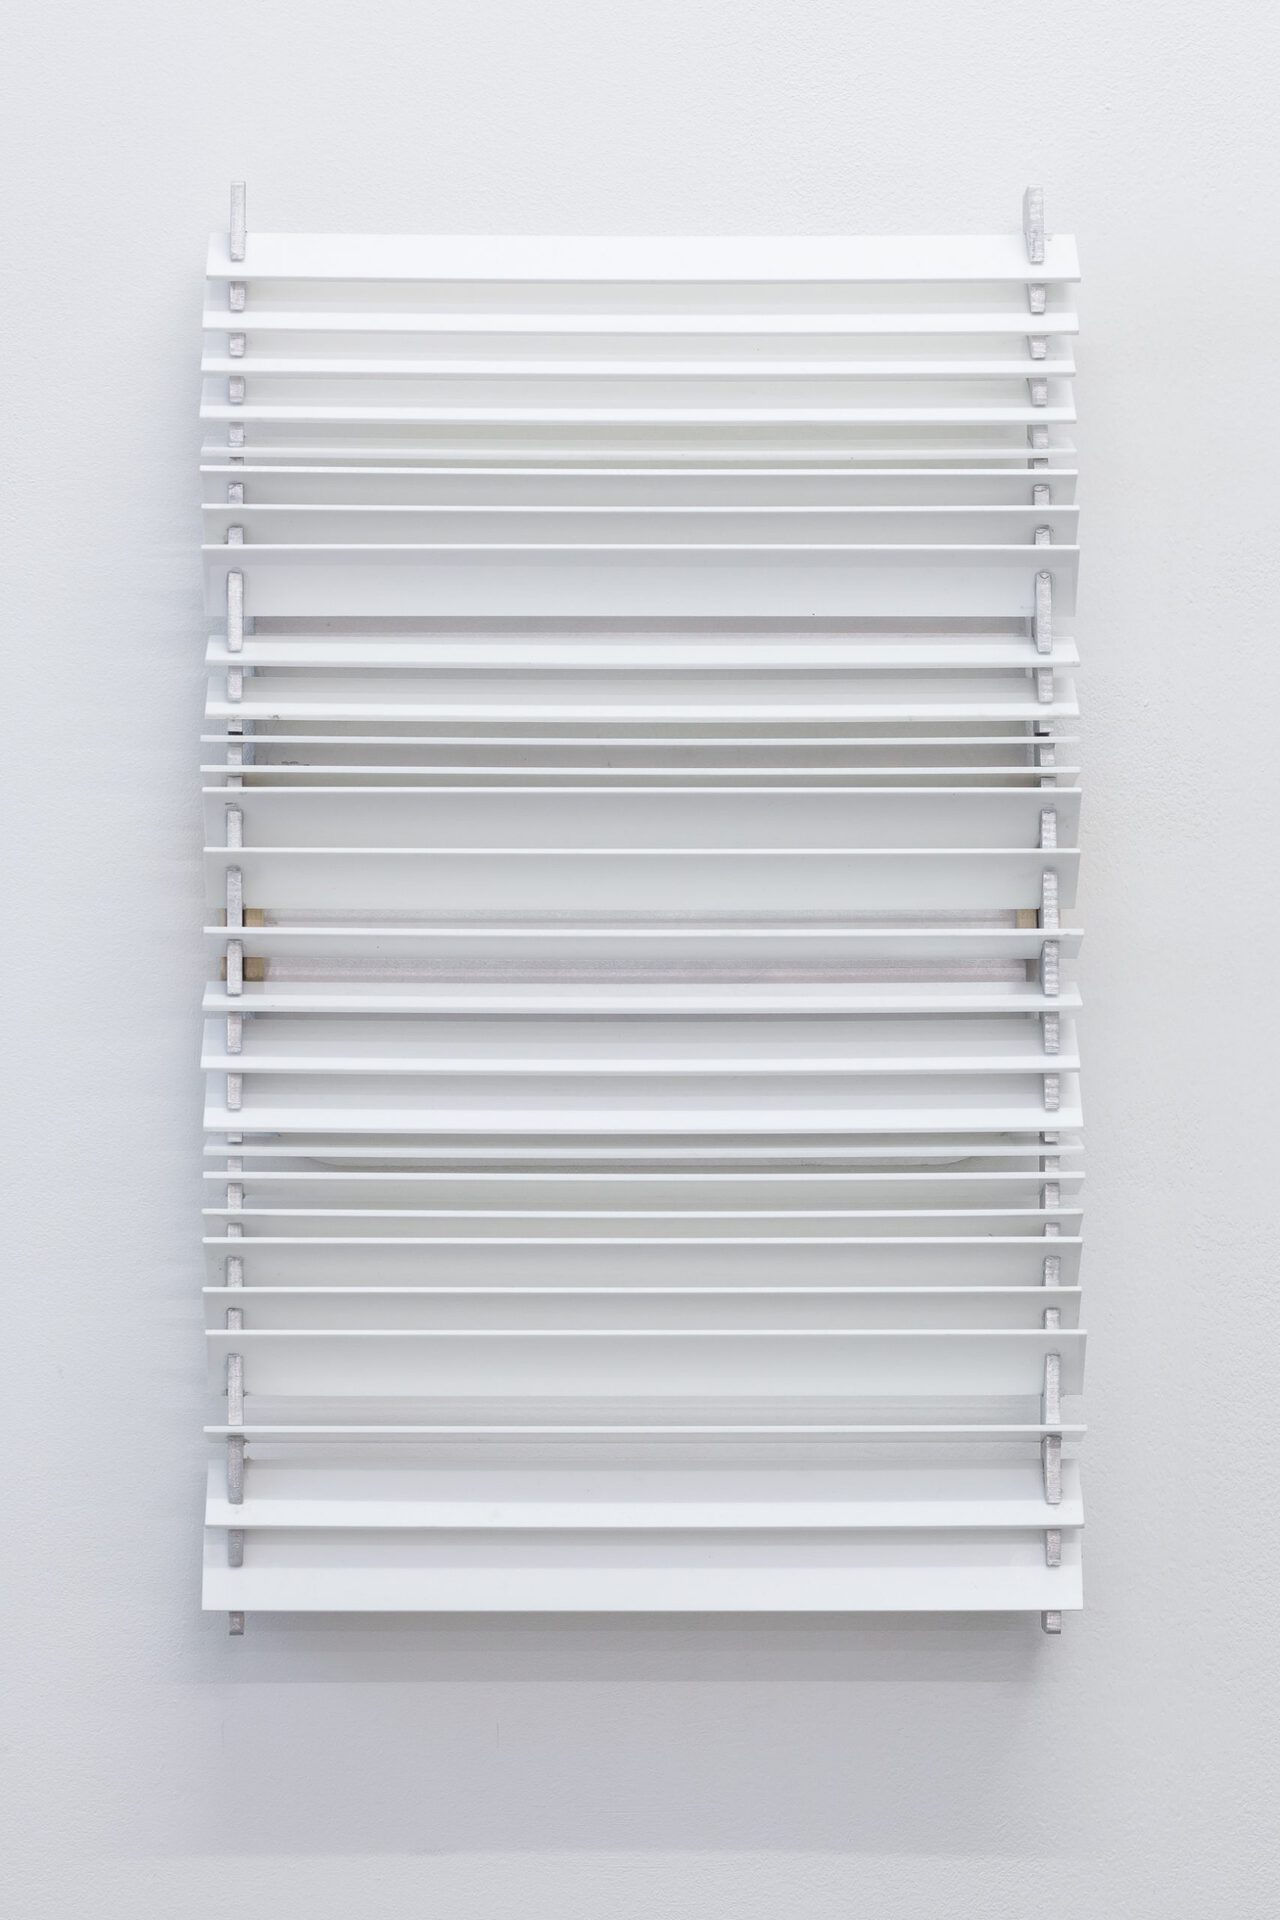 Elizabeth Orr, Open Frame, 2021, Aluminum, wood, plexiglass, 61 x 38.1 x 3.8 cm, 24 x 15 x 1.5 in